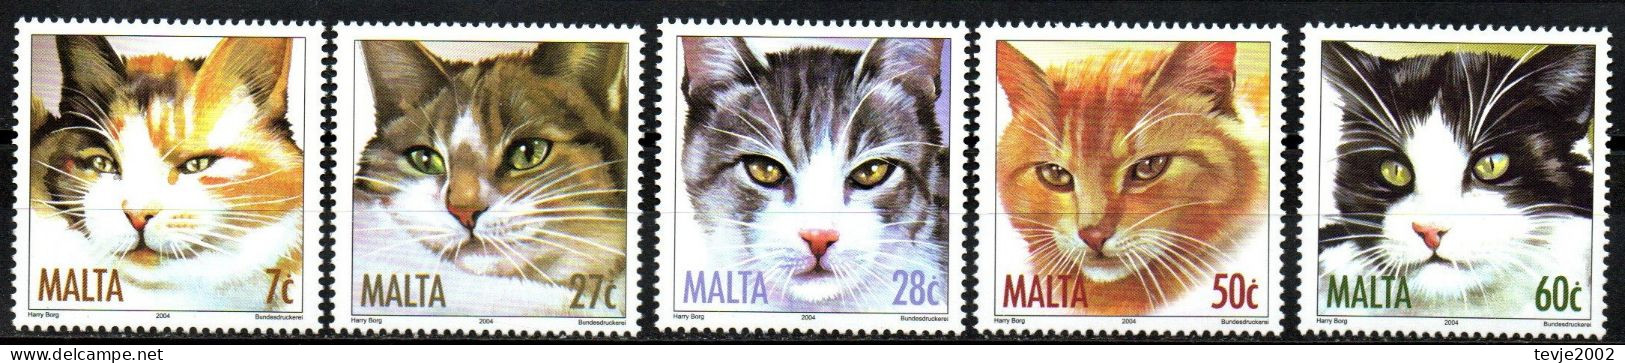 Malta 2004 - Mi.Nr. 1319 - 1323 - Postfrisch MNH - Tiere Animals Katzen Cats - Domestic Cats